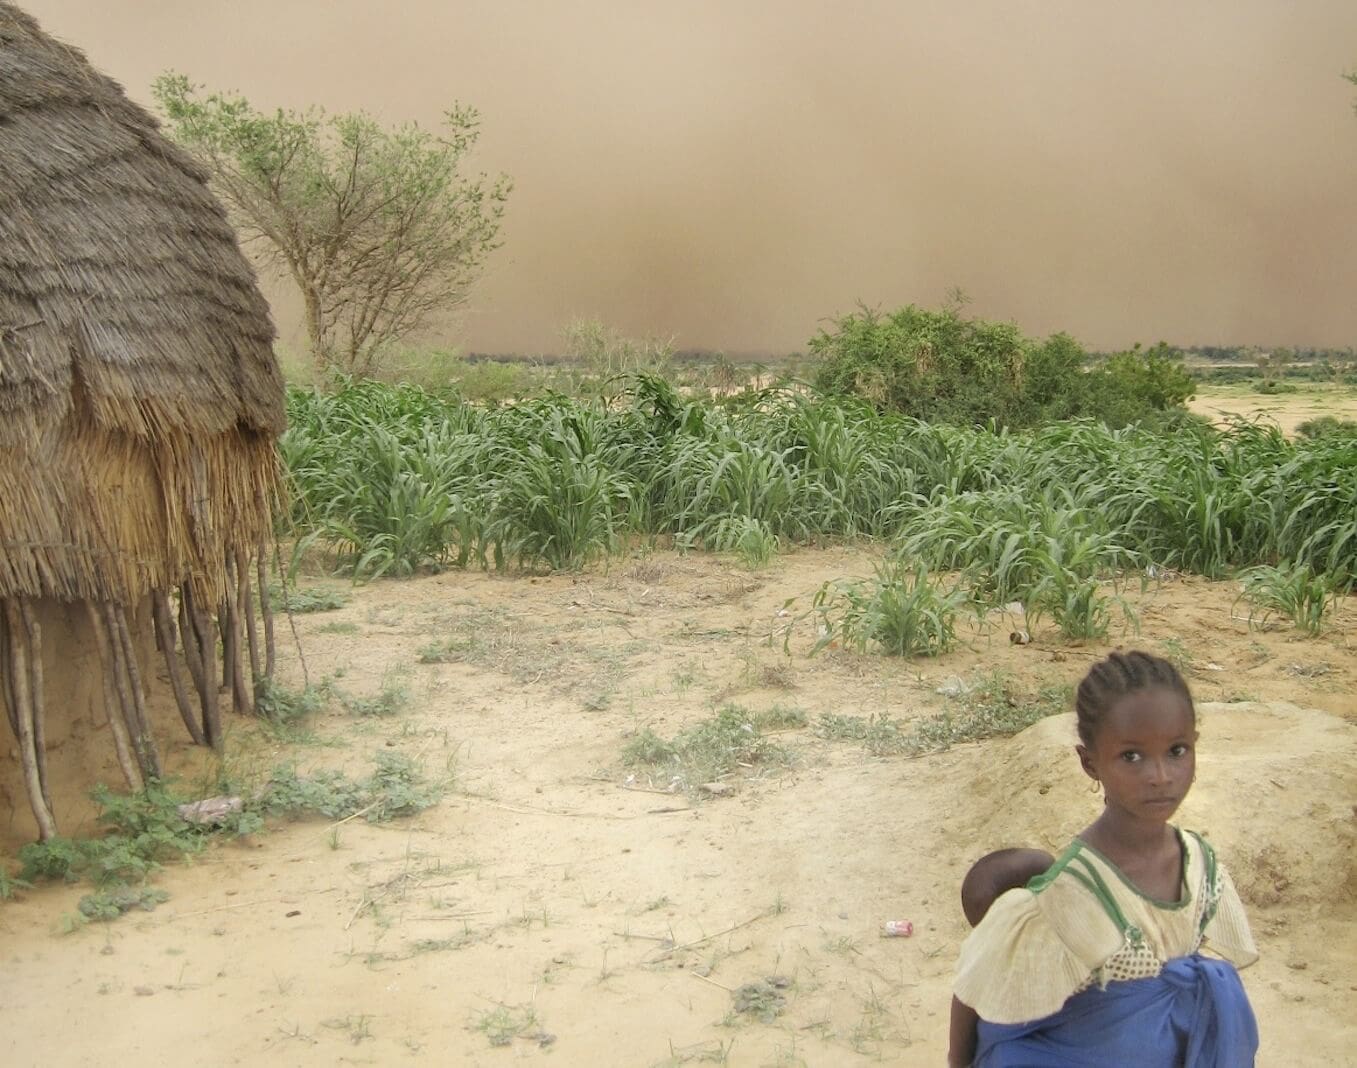 Niger, climate change hotspot